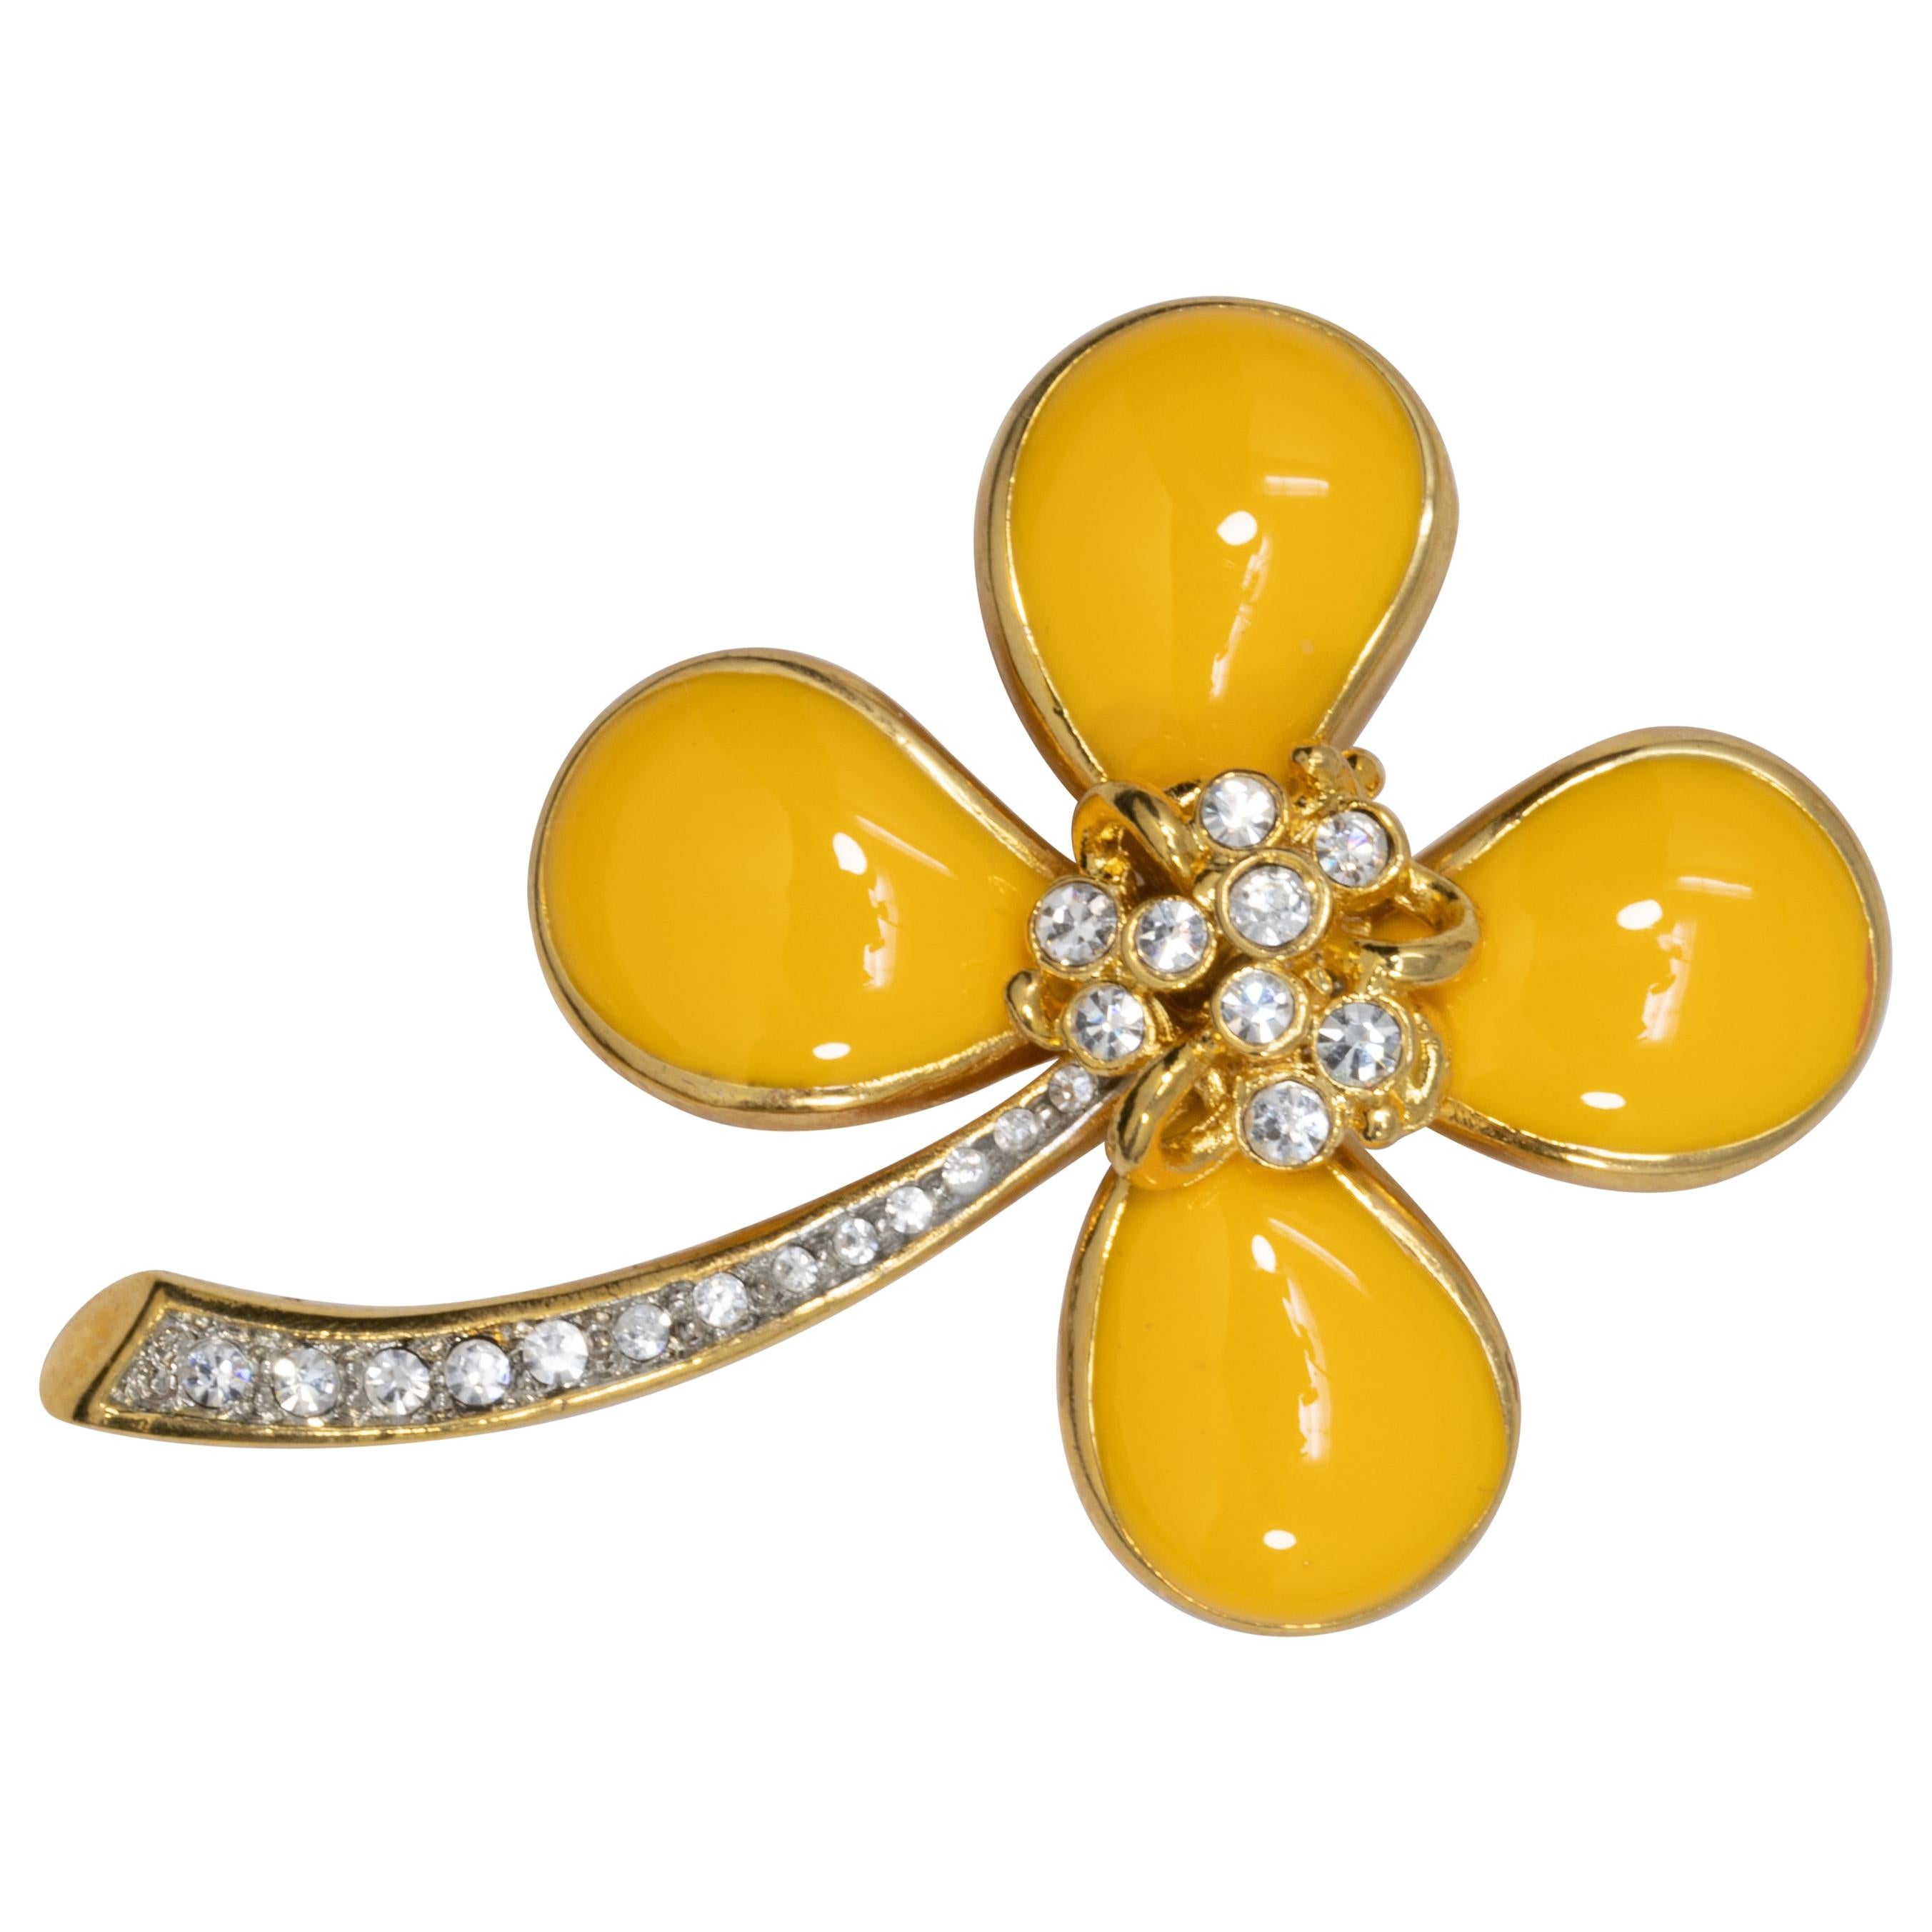 KJL Kenneth Jay Lane Embellished Flower Pin Brooch Yellow Resin Petals, Crystals